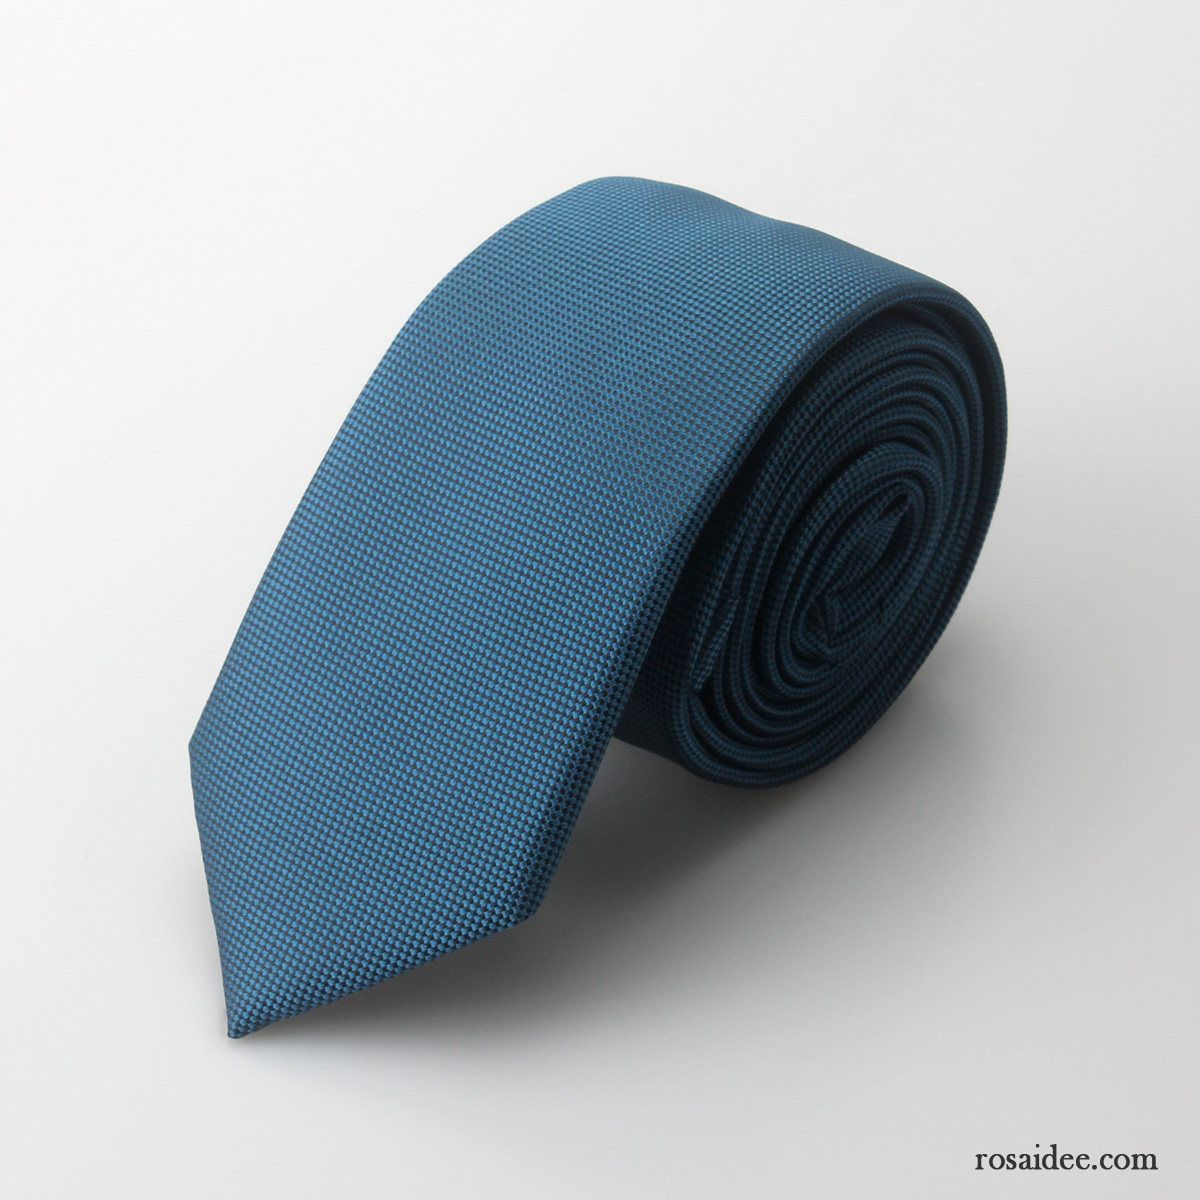 Krawatte Herren Neu Schmale Einfarbig 5 Cm Mini 2019 Blau Schwarz